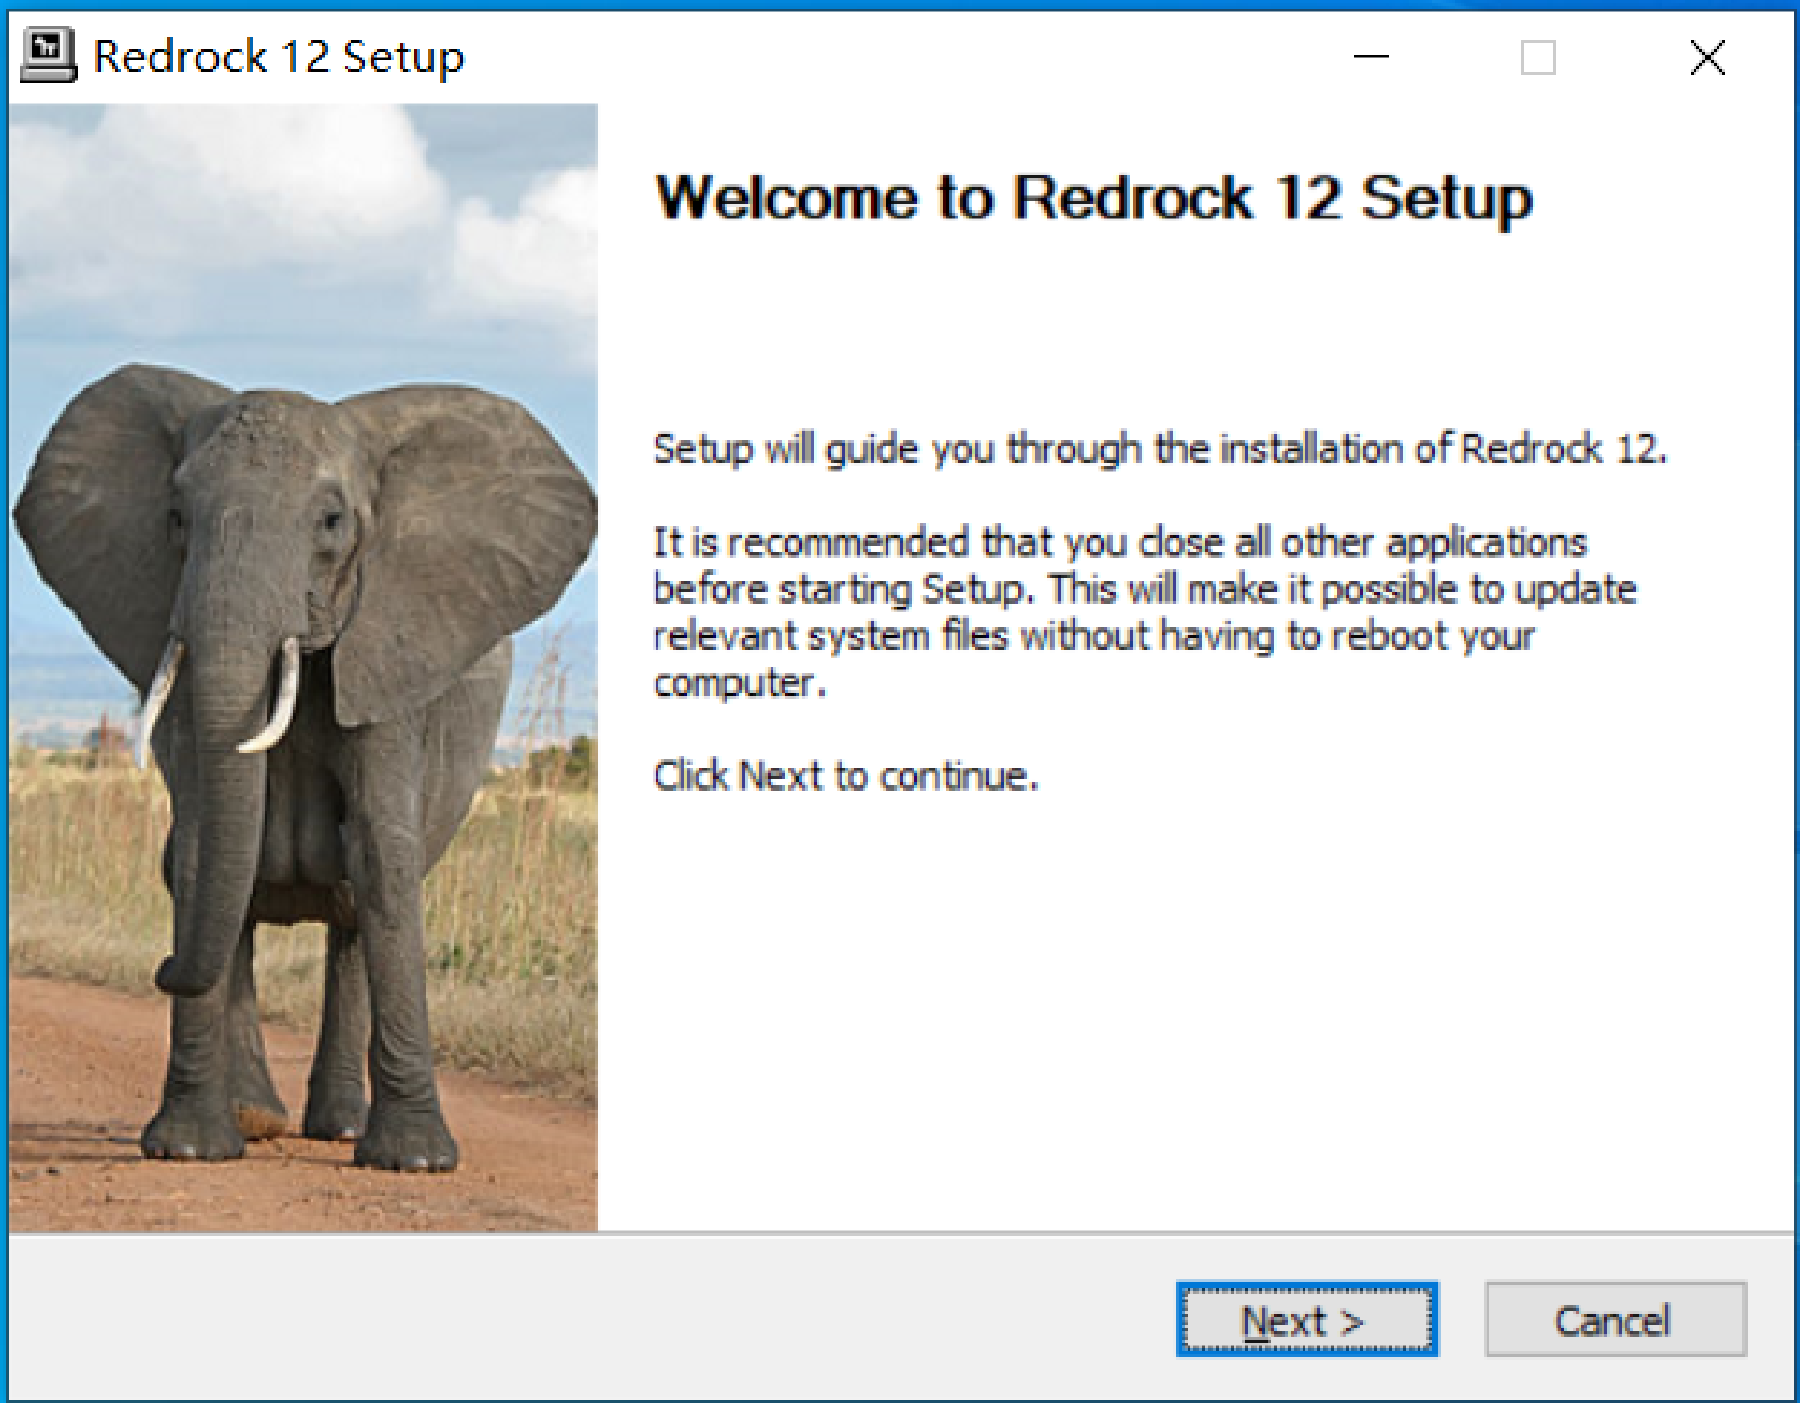 Fig. 1: The Redrock 12 Setup Welcome dialog